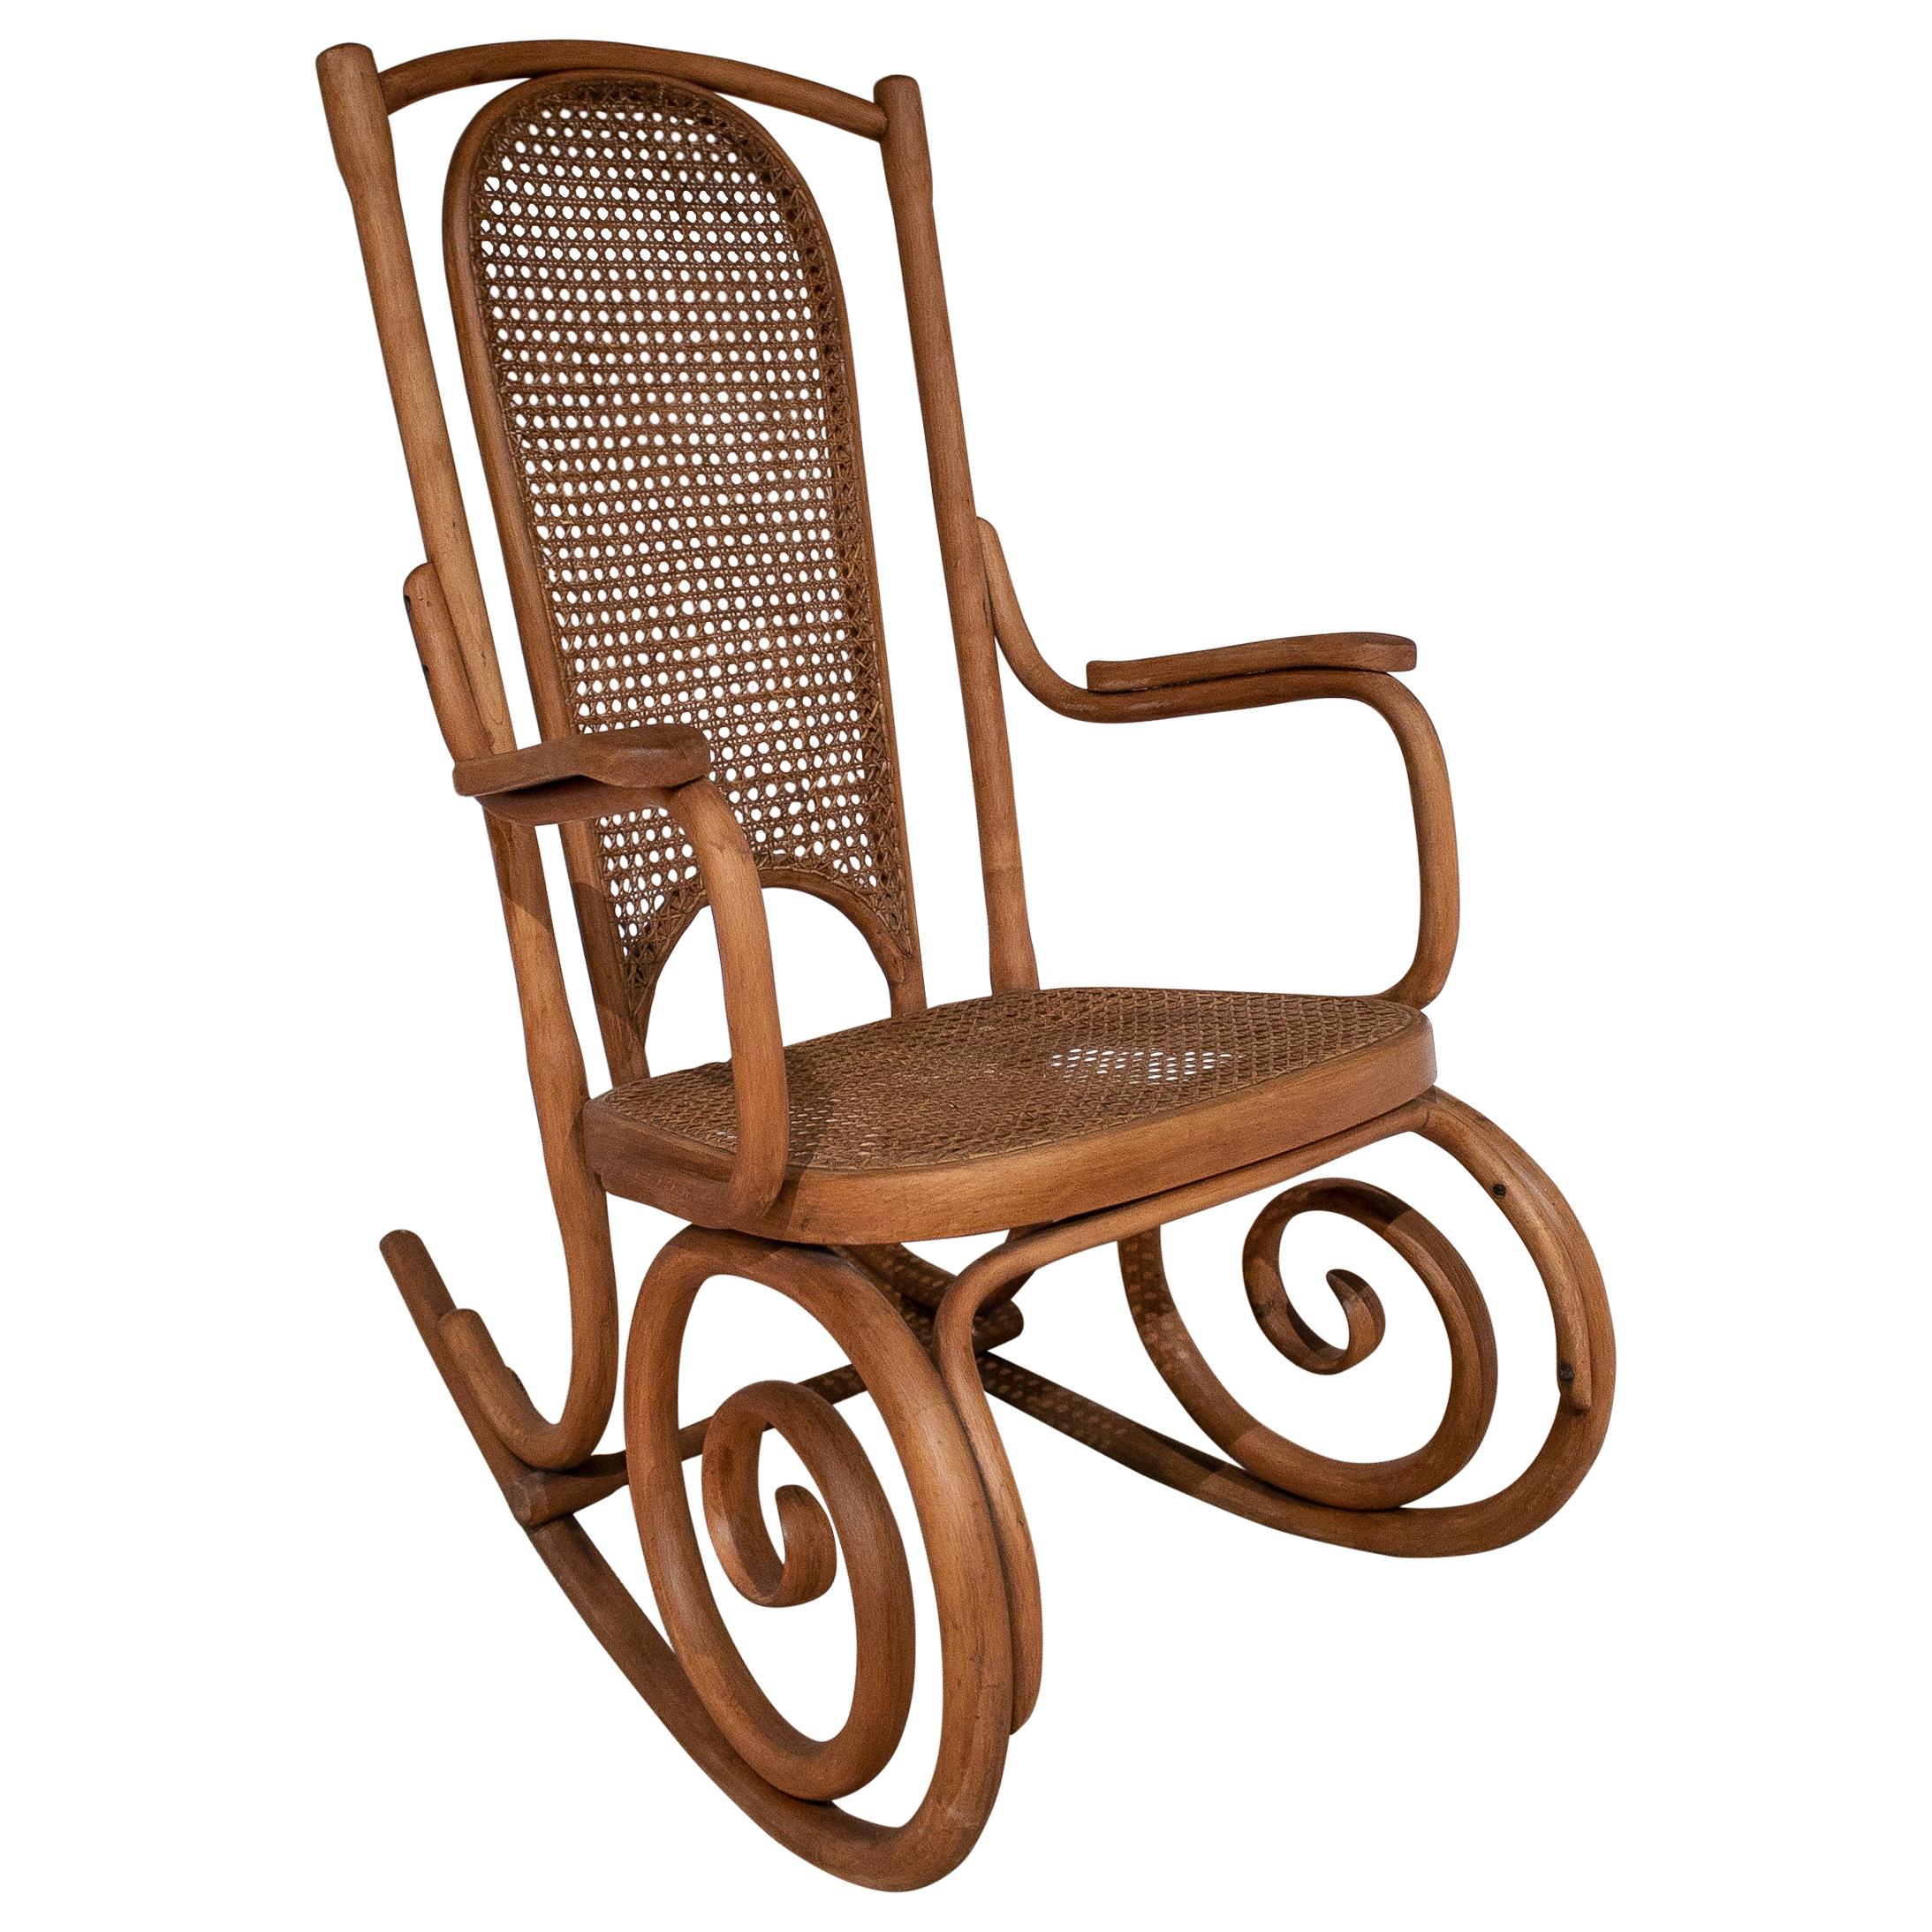 1950s Spanish Hand Woven Wicker Wooden Rocking Chair